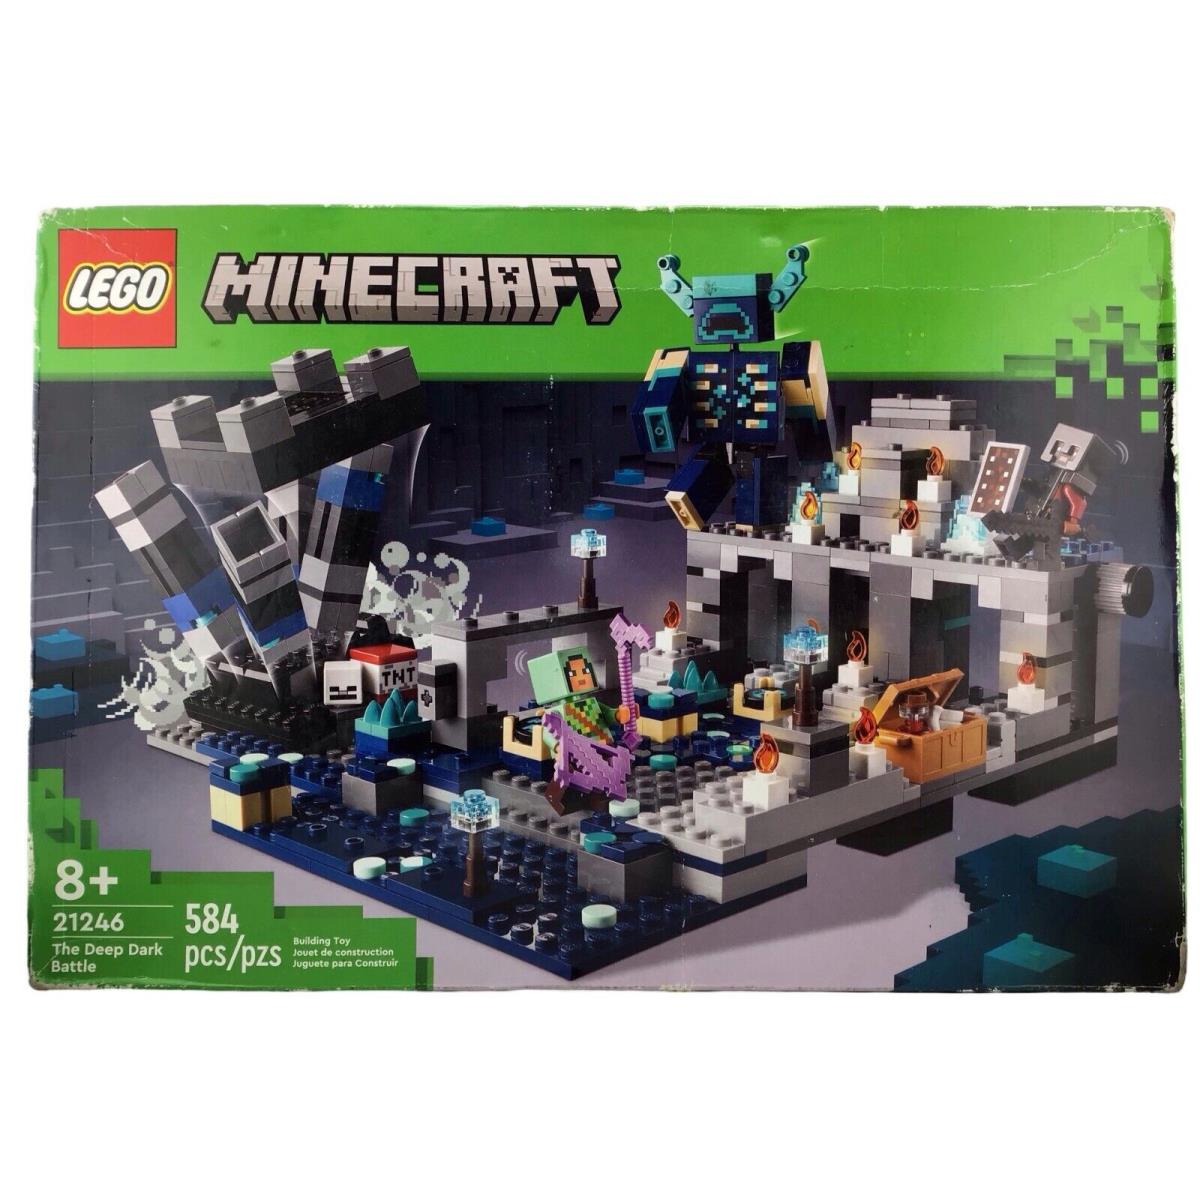 Lego Minecraft 21246 The Deep Dark Battle Set Biome Adventure Building Set